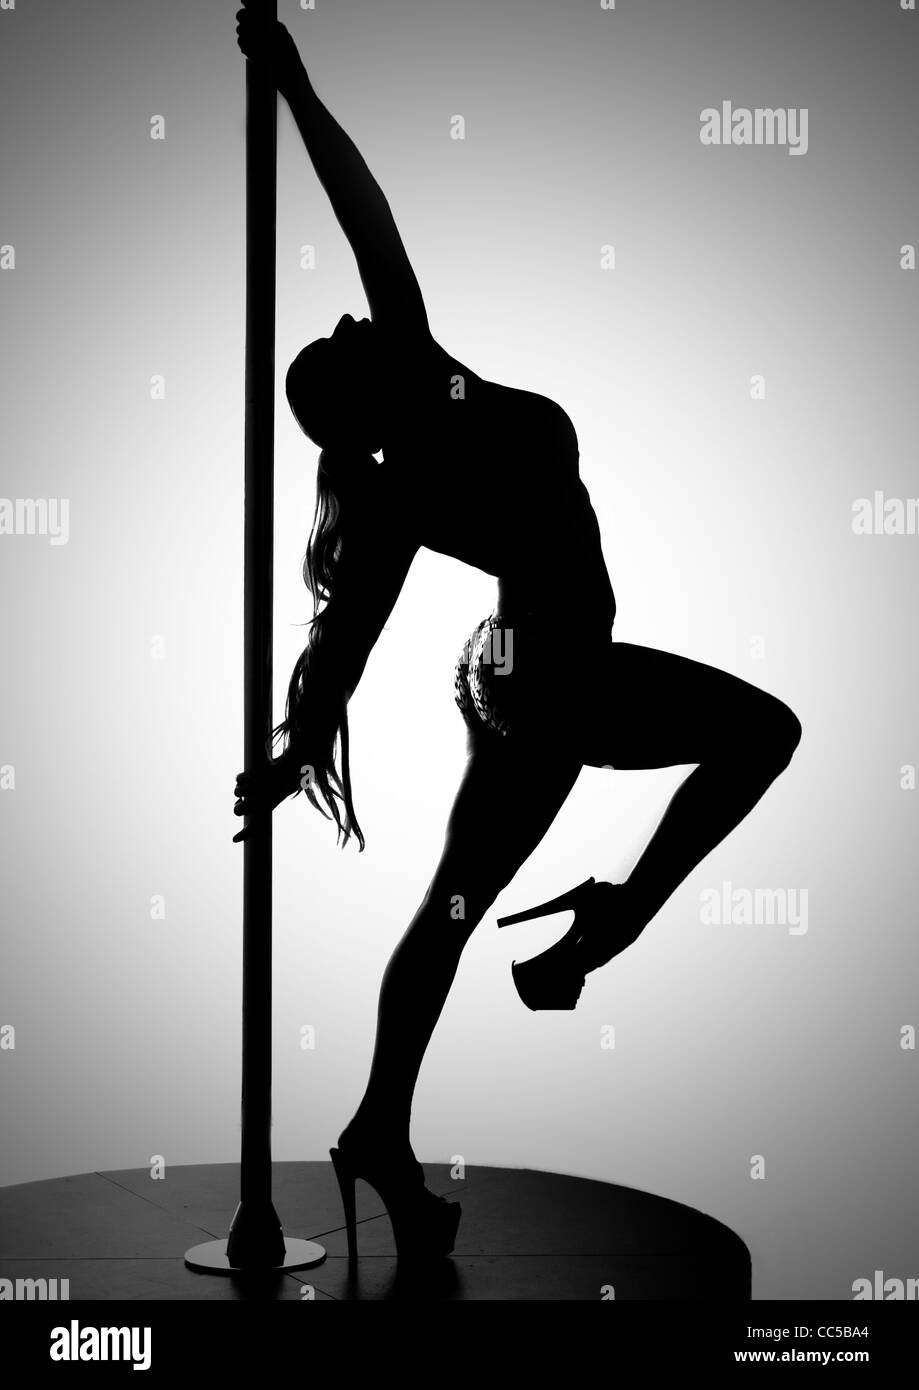 Stripping or Sport: The Stigma of Pole Dance – TATLER